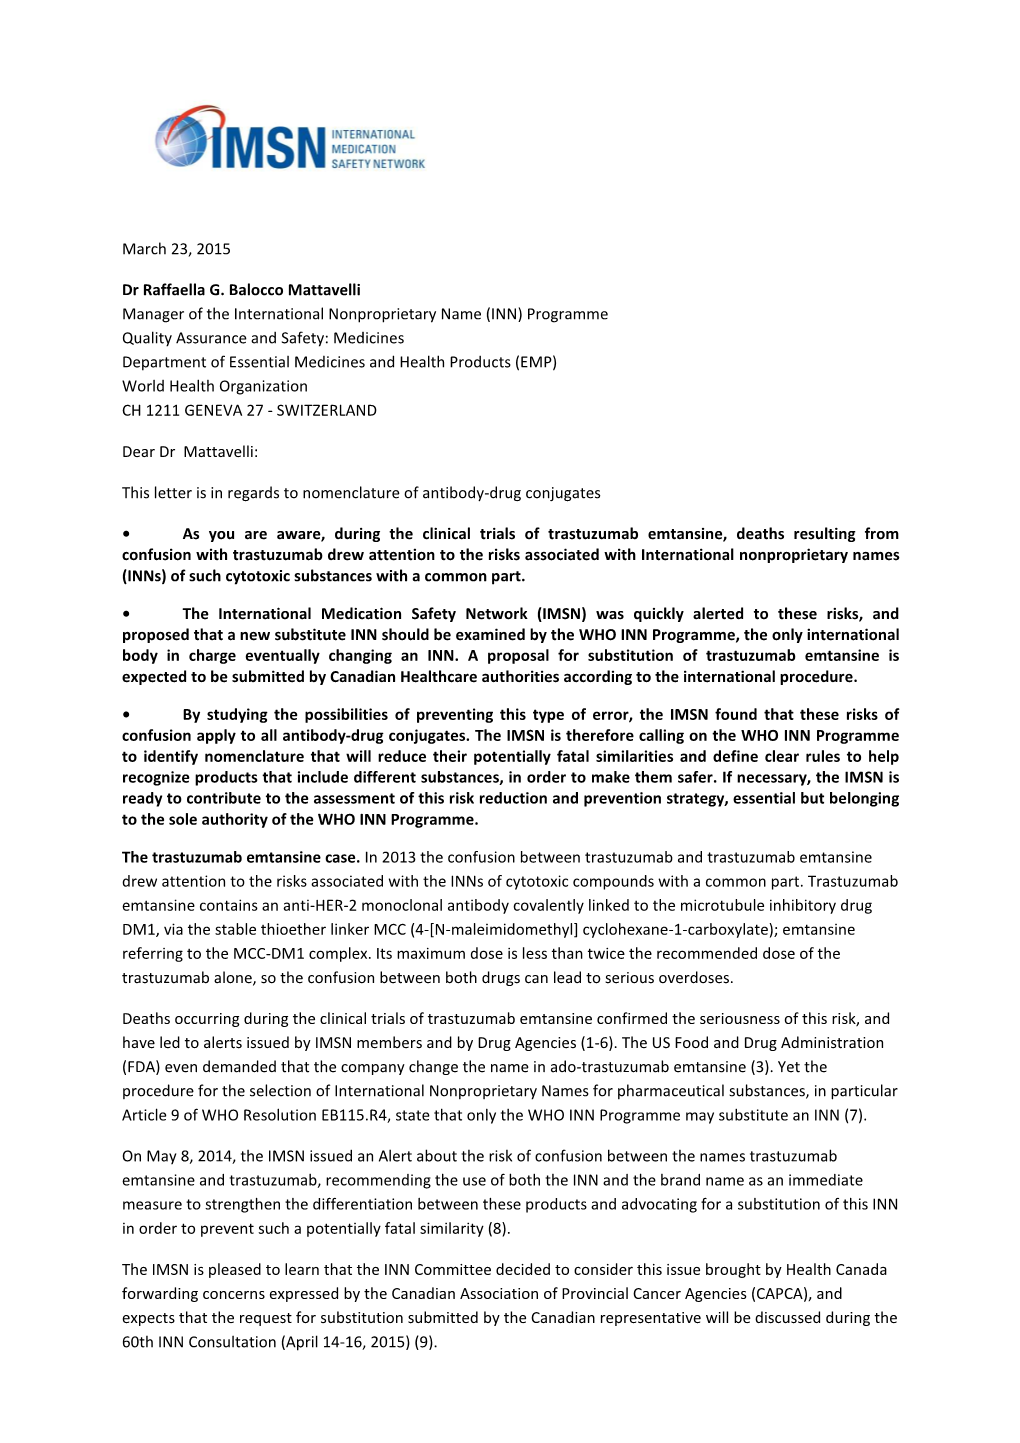 IMSN Letter on Antibody-Drug Conjugates 2015 03 23